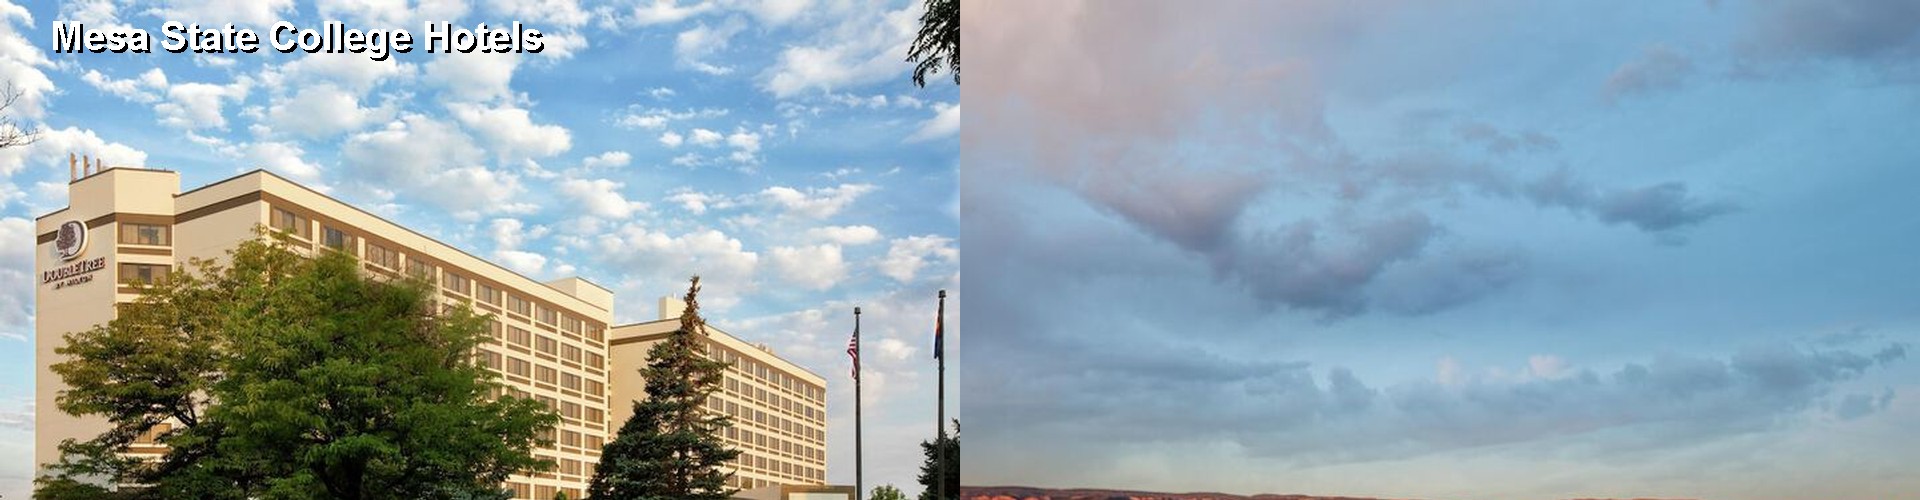 5 Best Hotels near Mesa State College